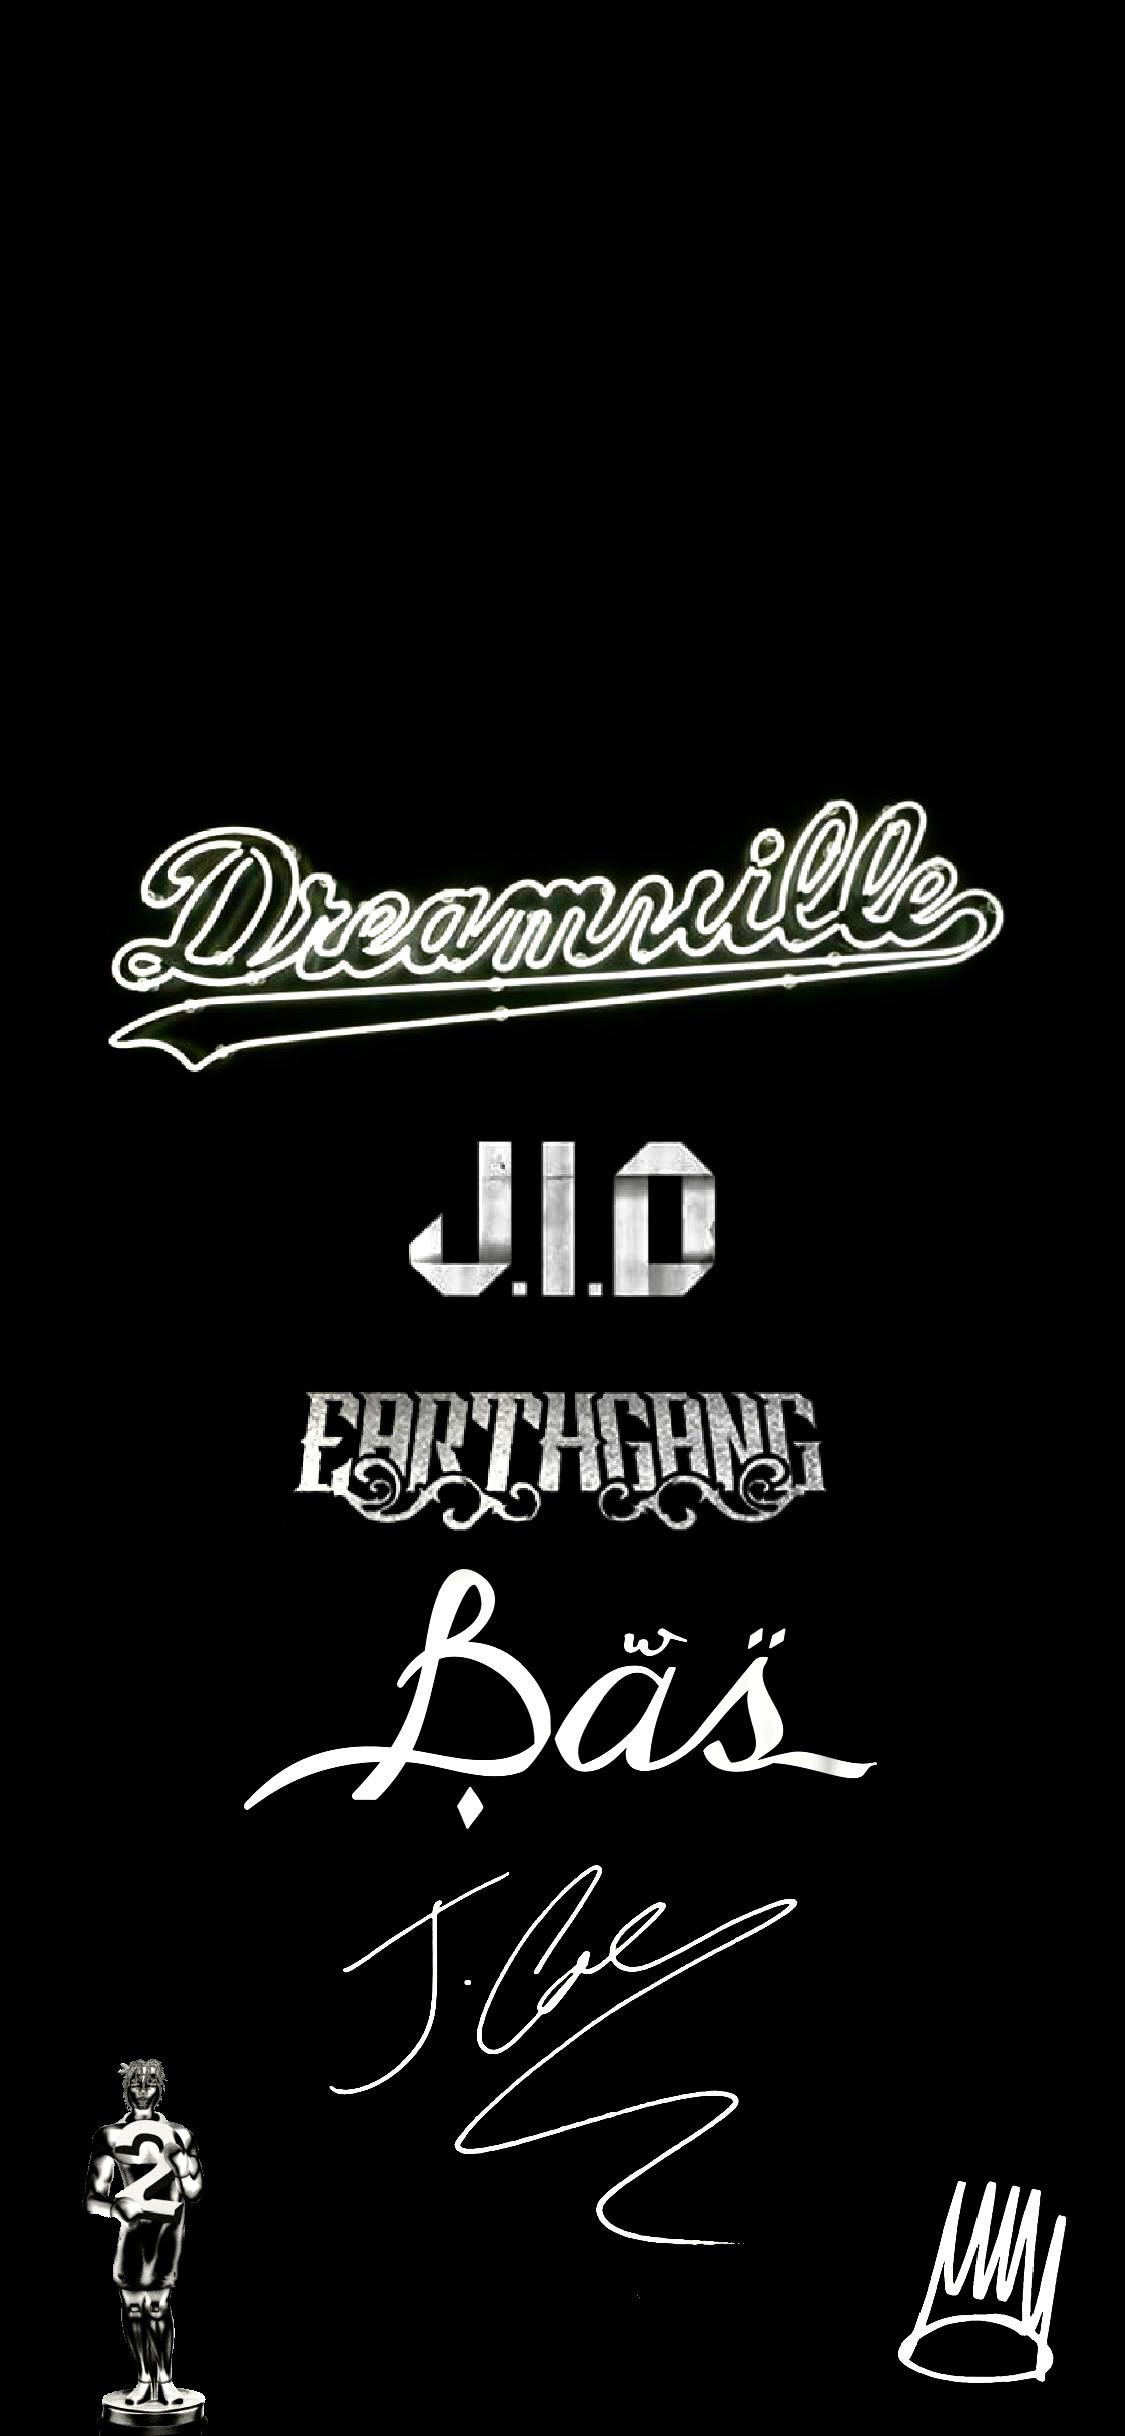 FIXED Dreamville, J. Cole, Bas, JID, and EARTHGANG wallpaper